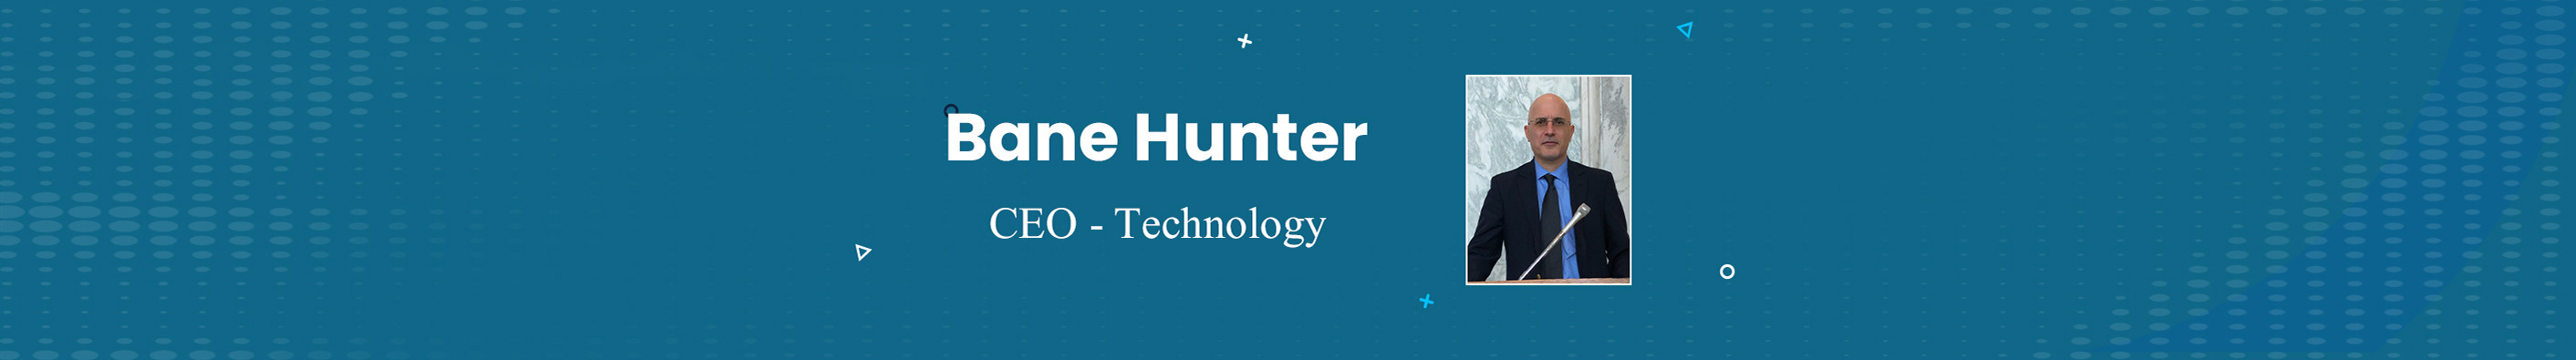 Bane Hunter's profile banner